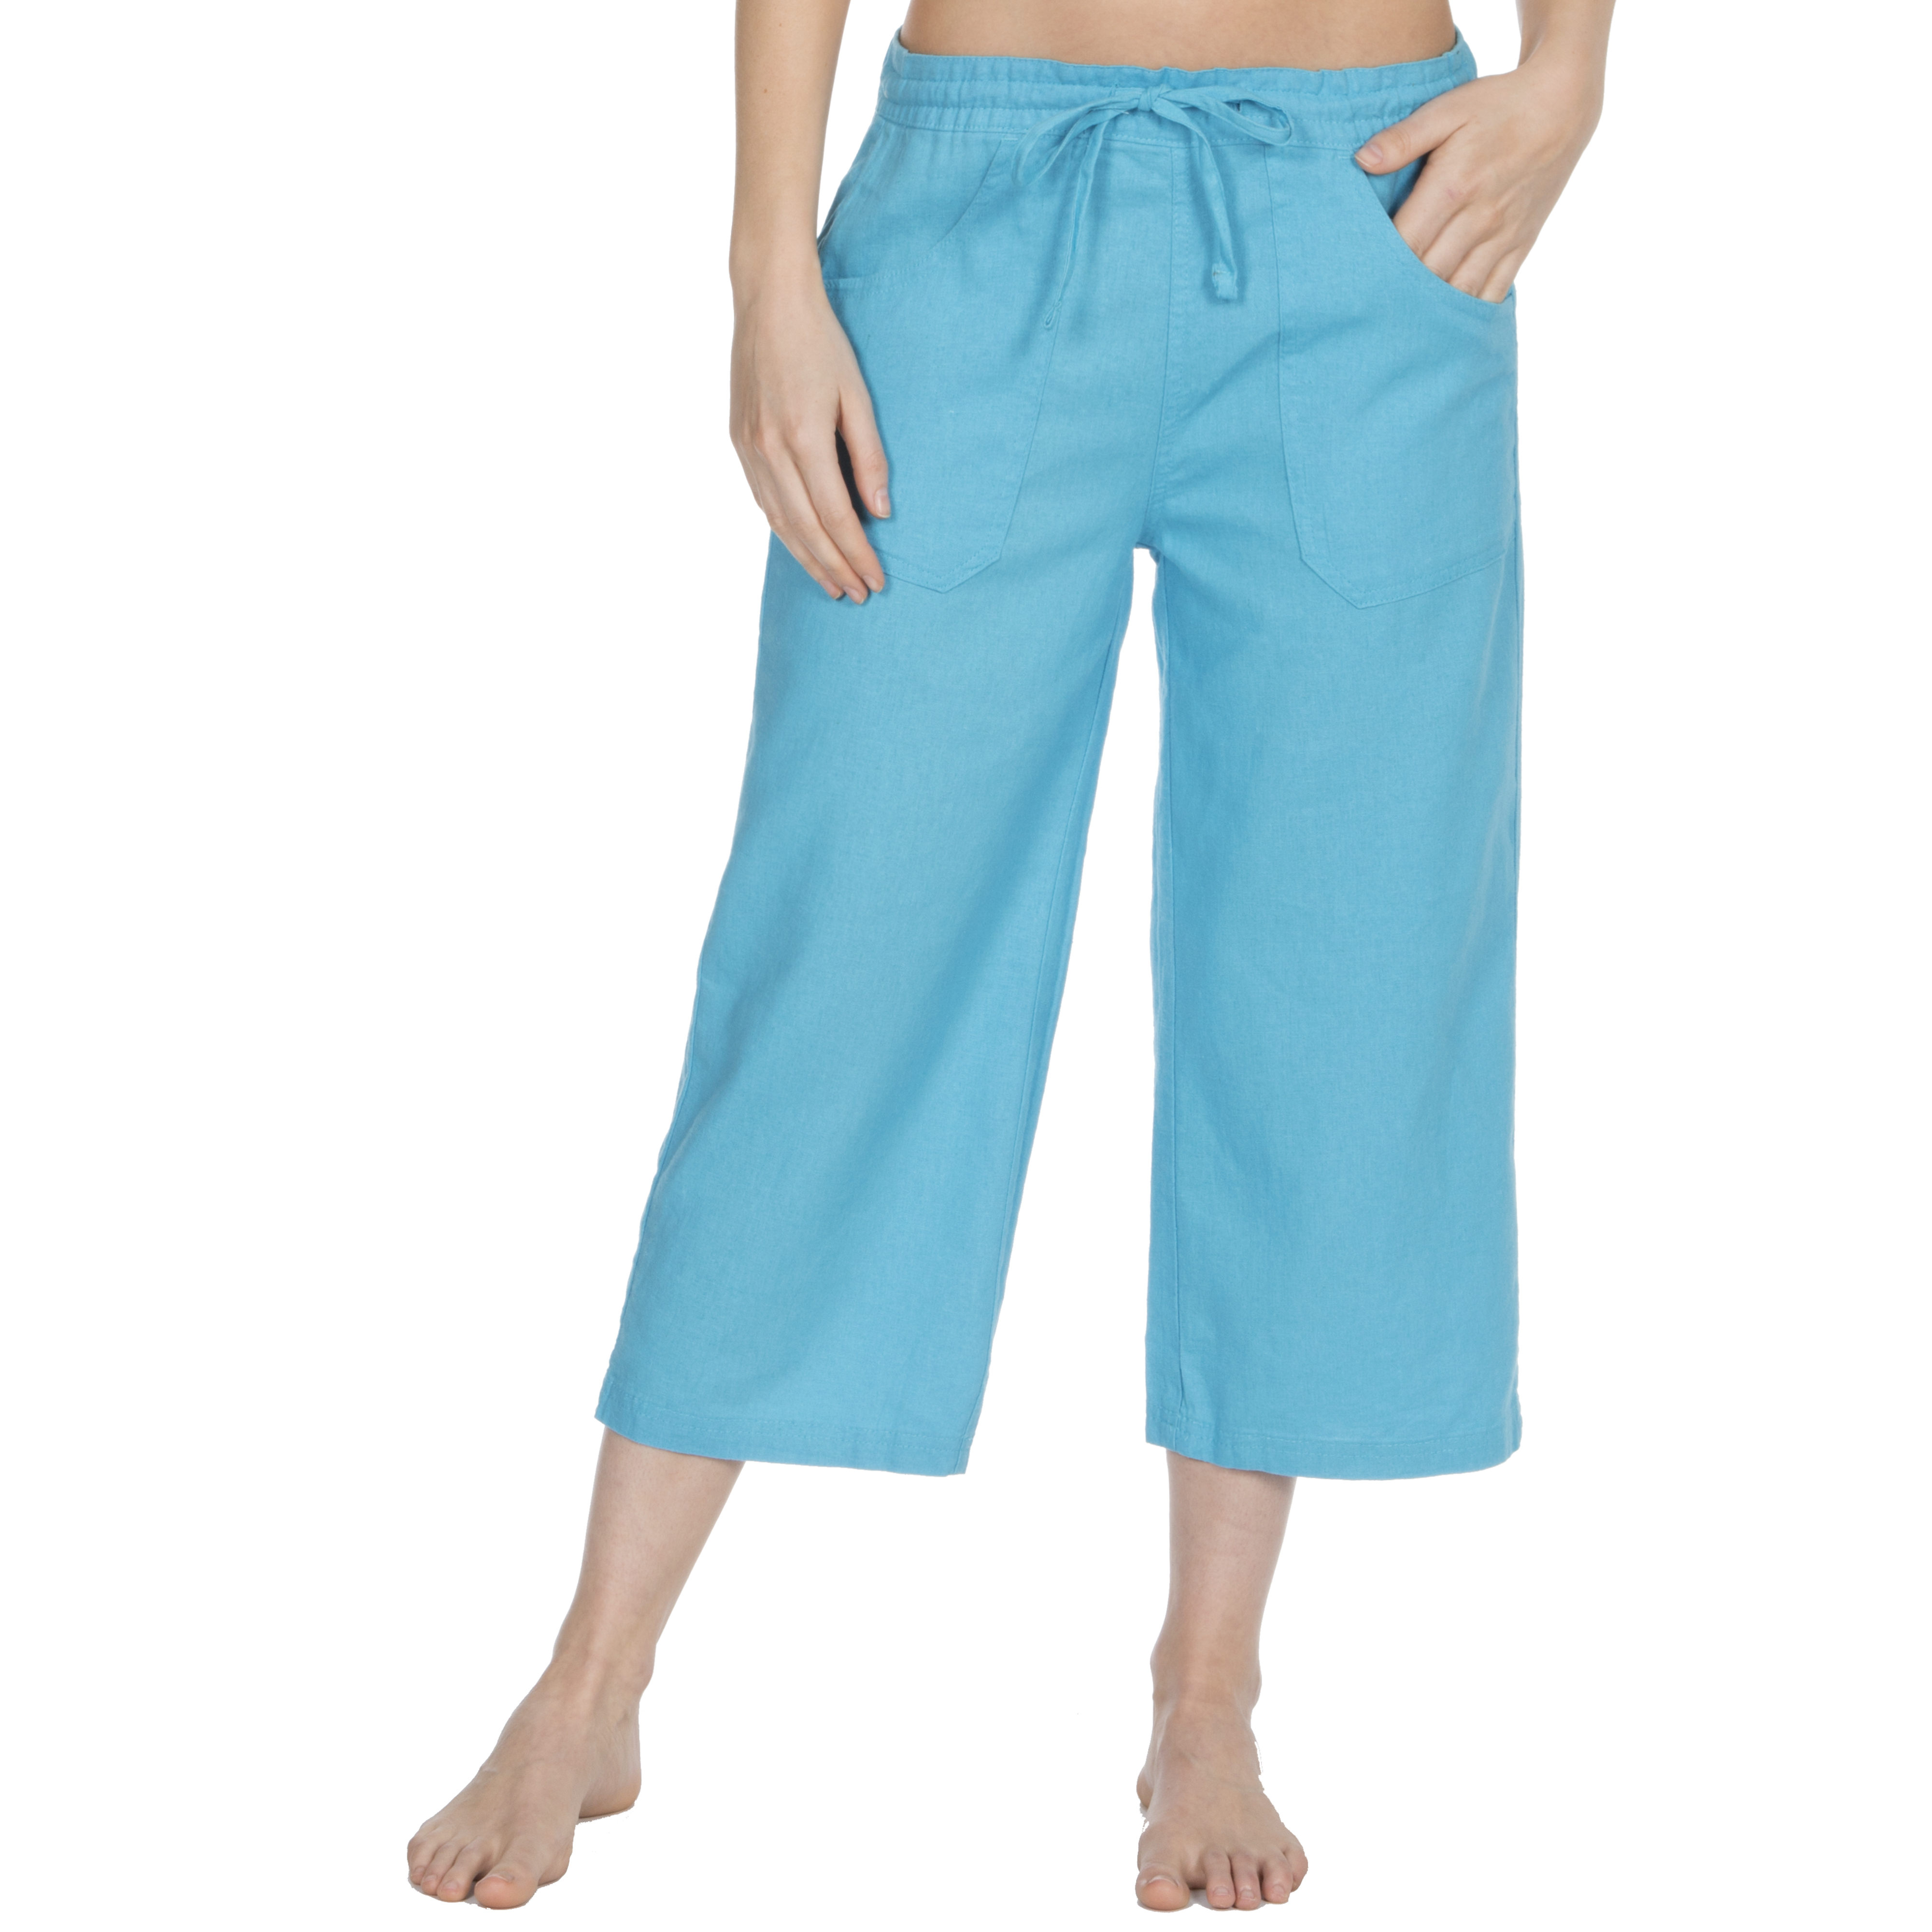 Metzuyan Womens Cropped Linen Capri Pants 3/4 Summer Shorts Plus